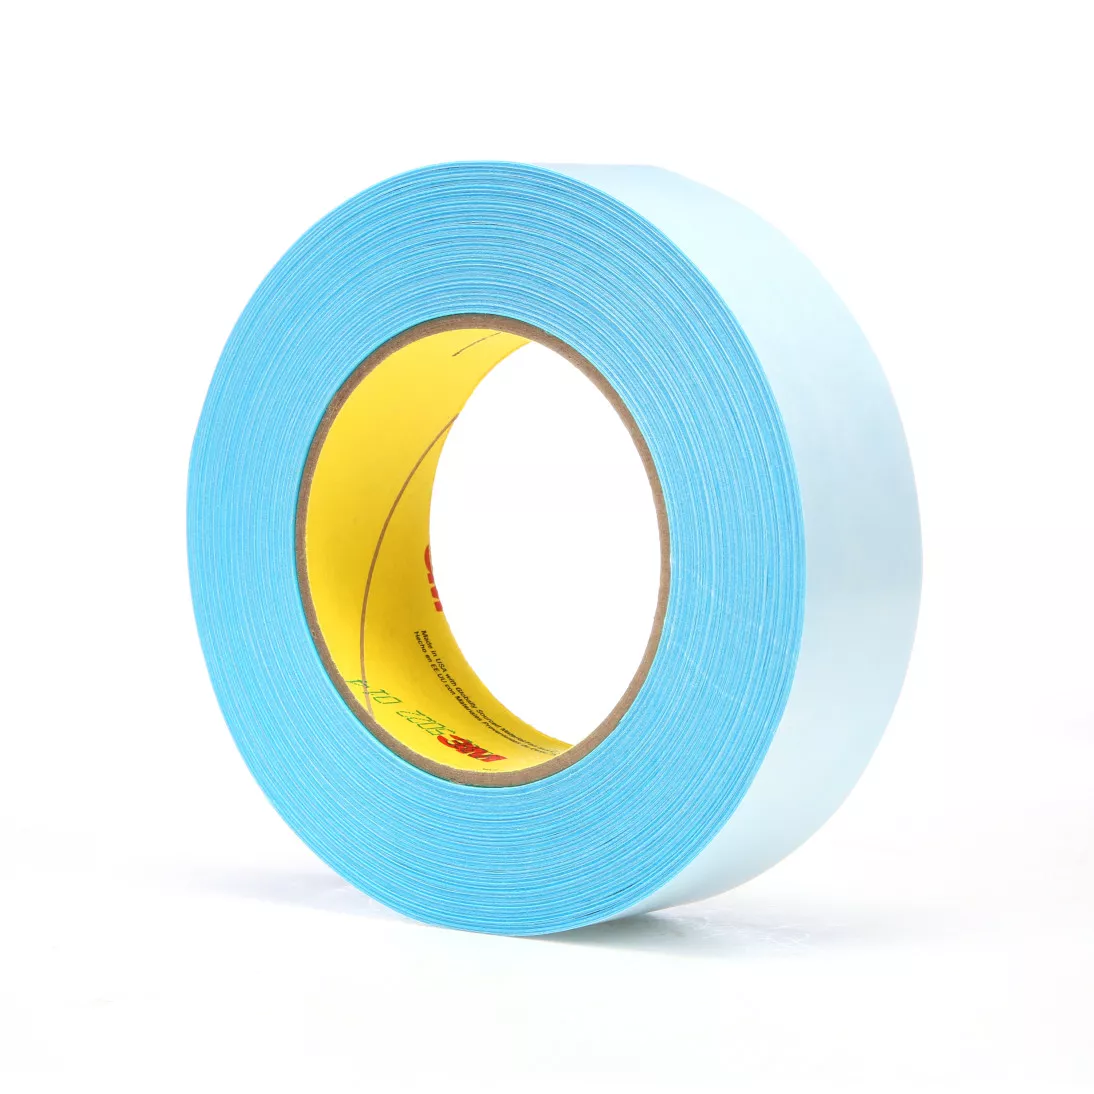 3M™ Repulpable Double Coated Splicing Tape 9038B, Blue, 36 mm x 55 m, 3
mil, 24 rolls per case